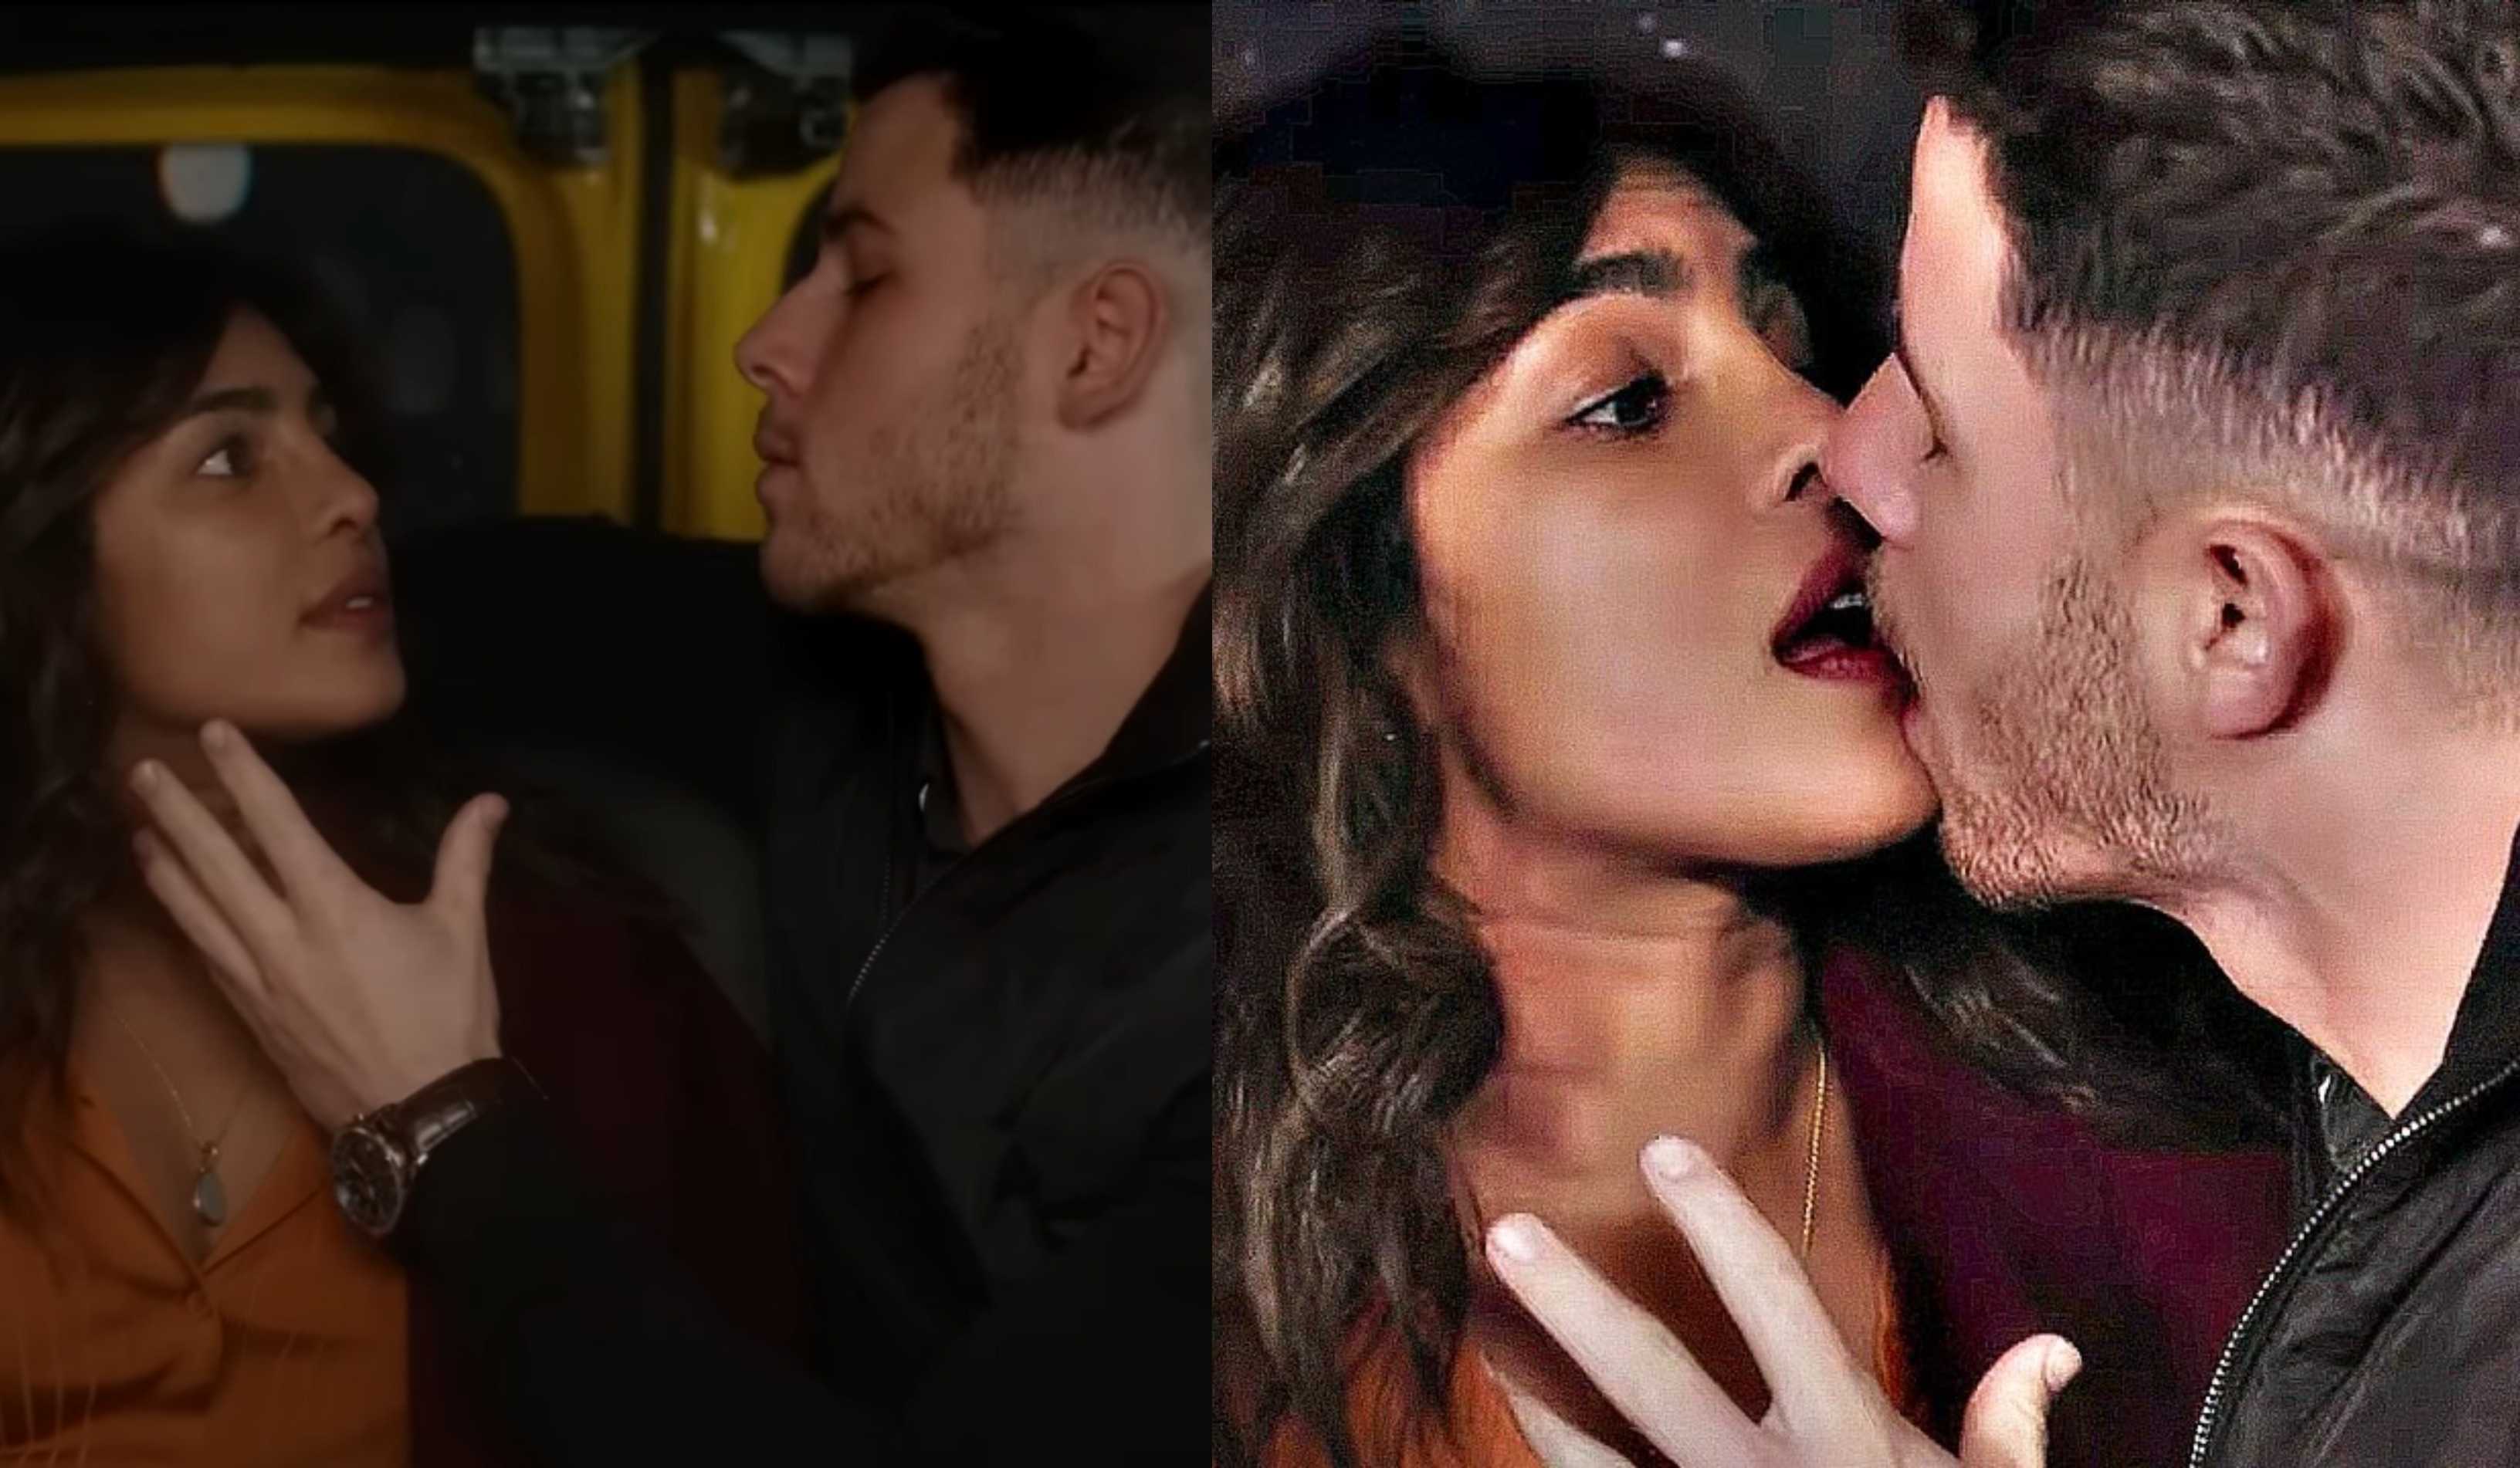 ‘He licked your face’: Priyanka Chopra's Love Again co-star Sam Heughan on Nick Jonas' scene with the actress